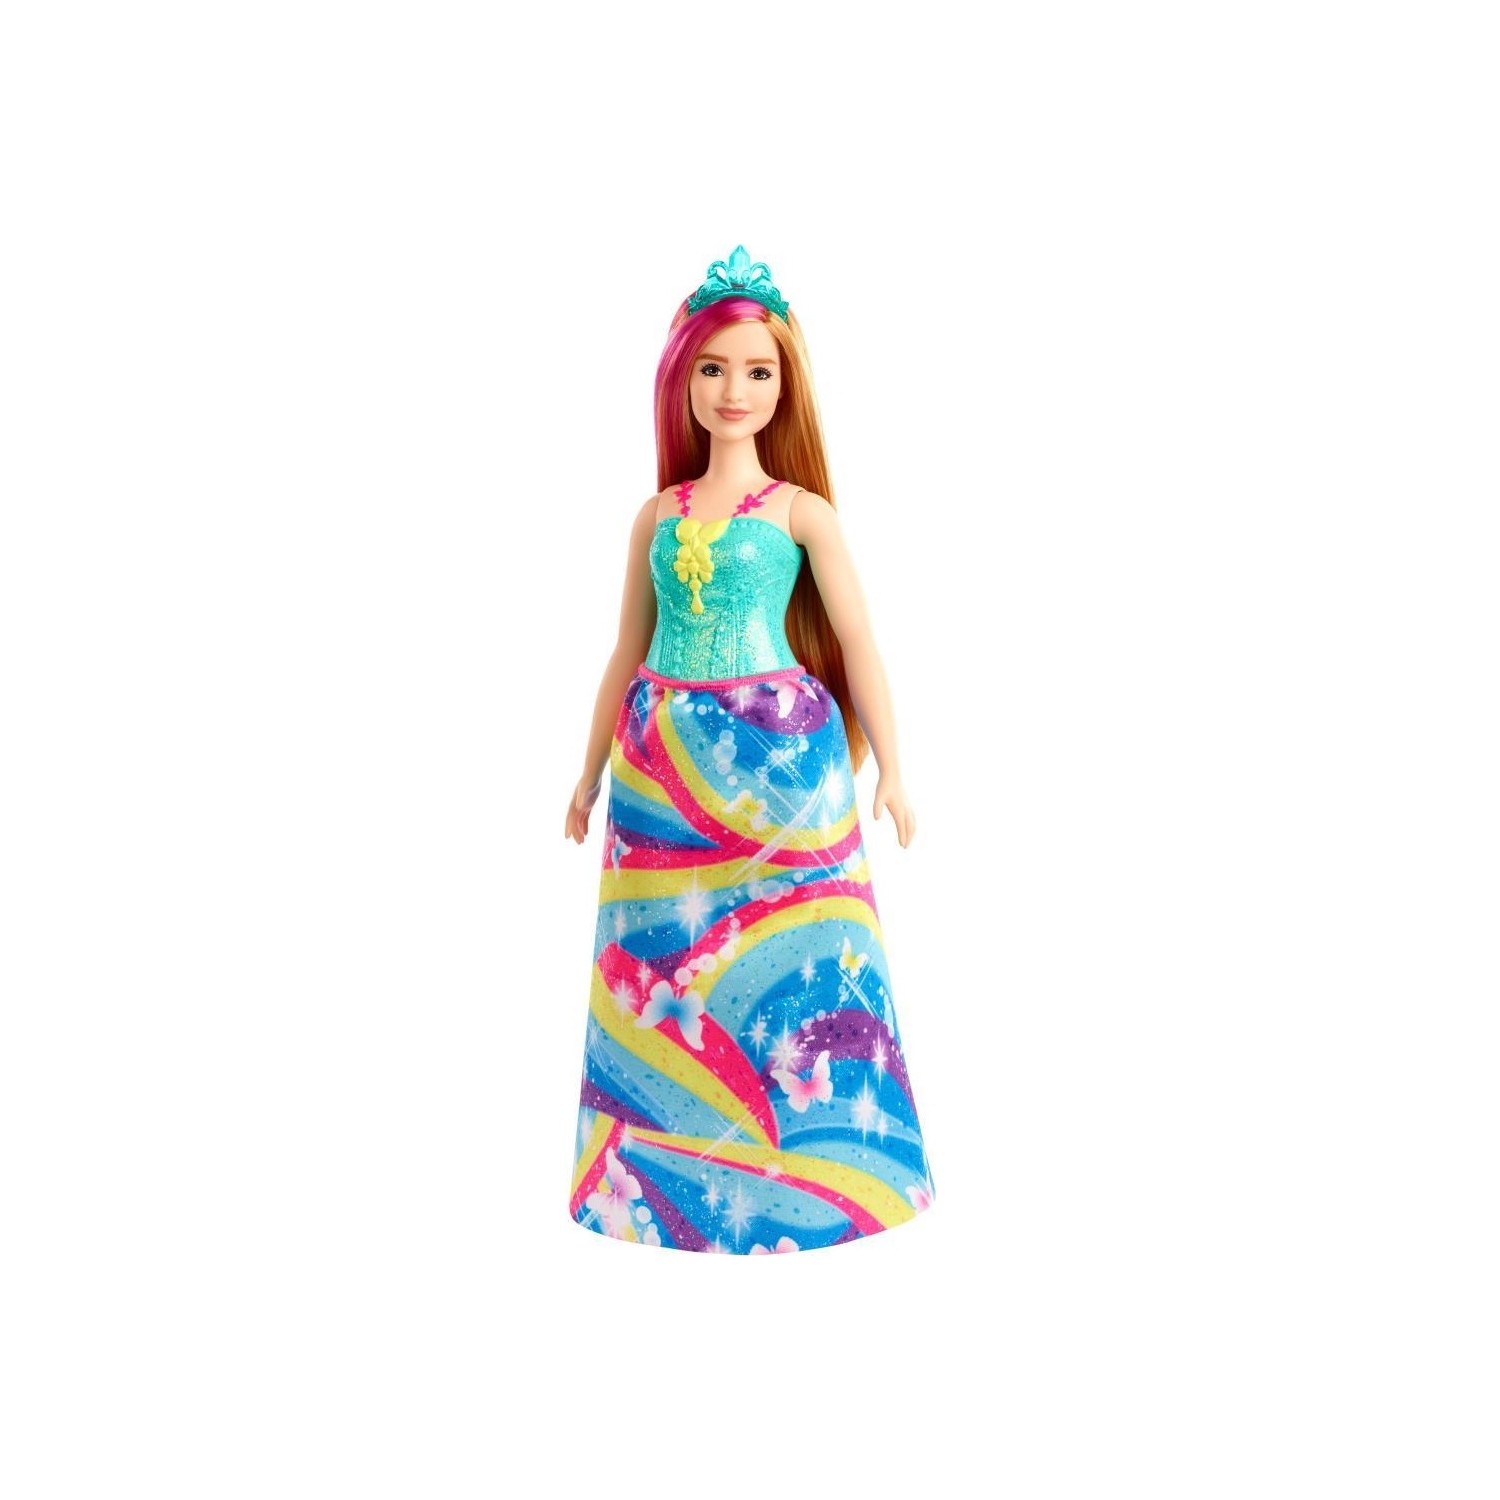 Кукла Barbie Dreamtopia Princess Dolls GJK16 кукла barbie dreamtopia long hair dolls gtf37